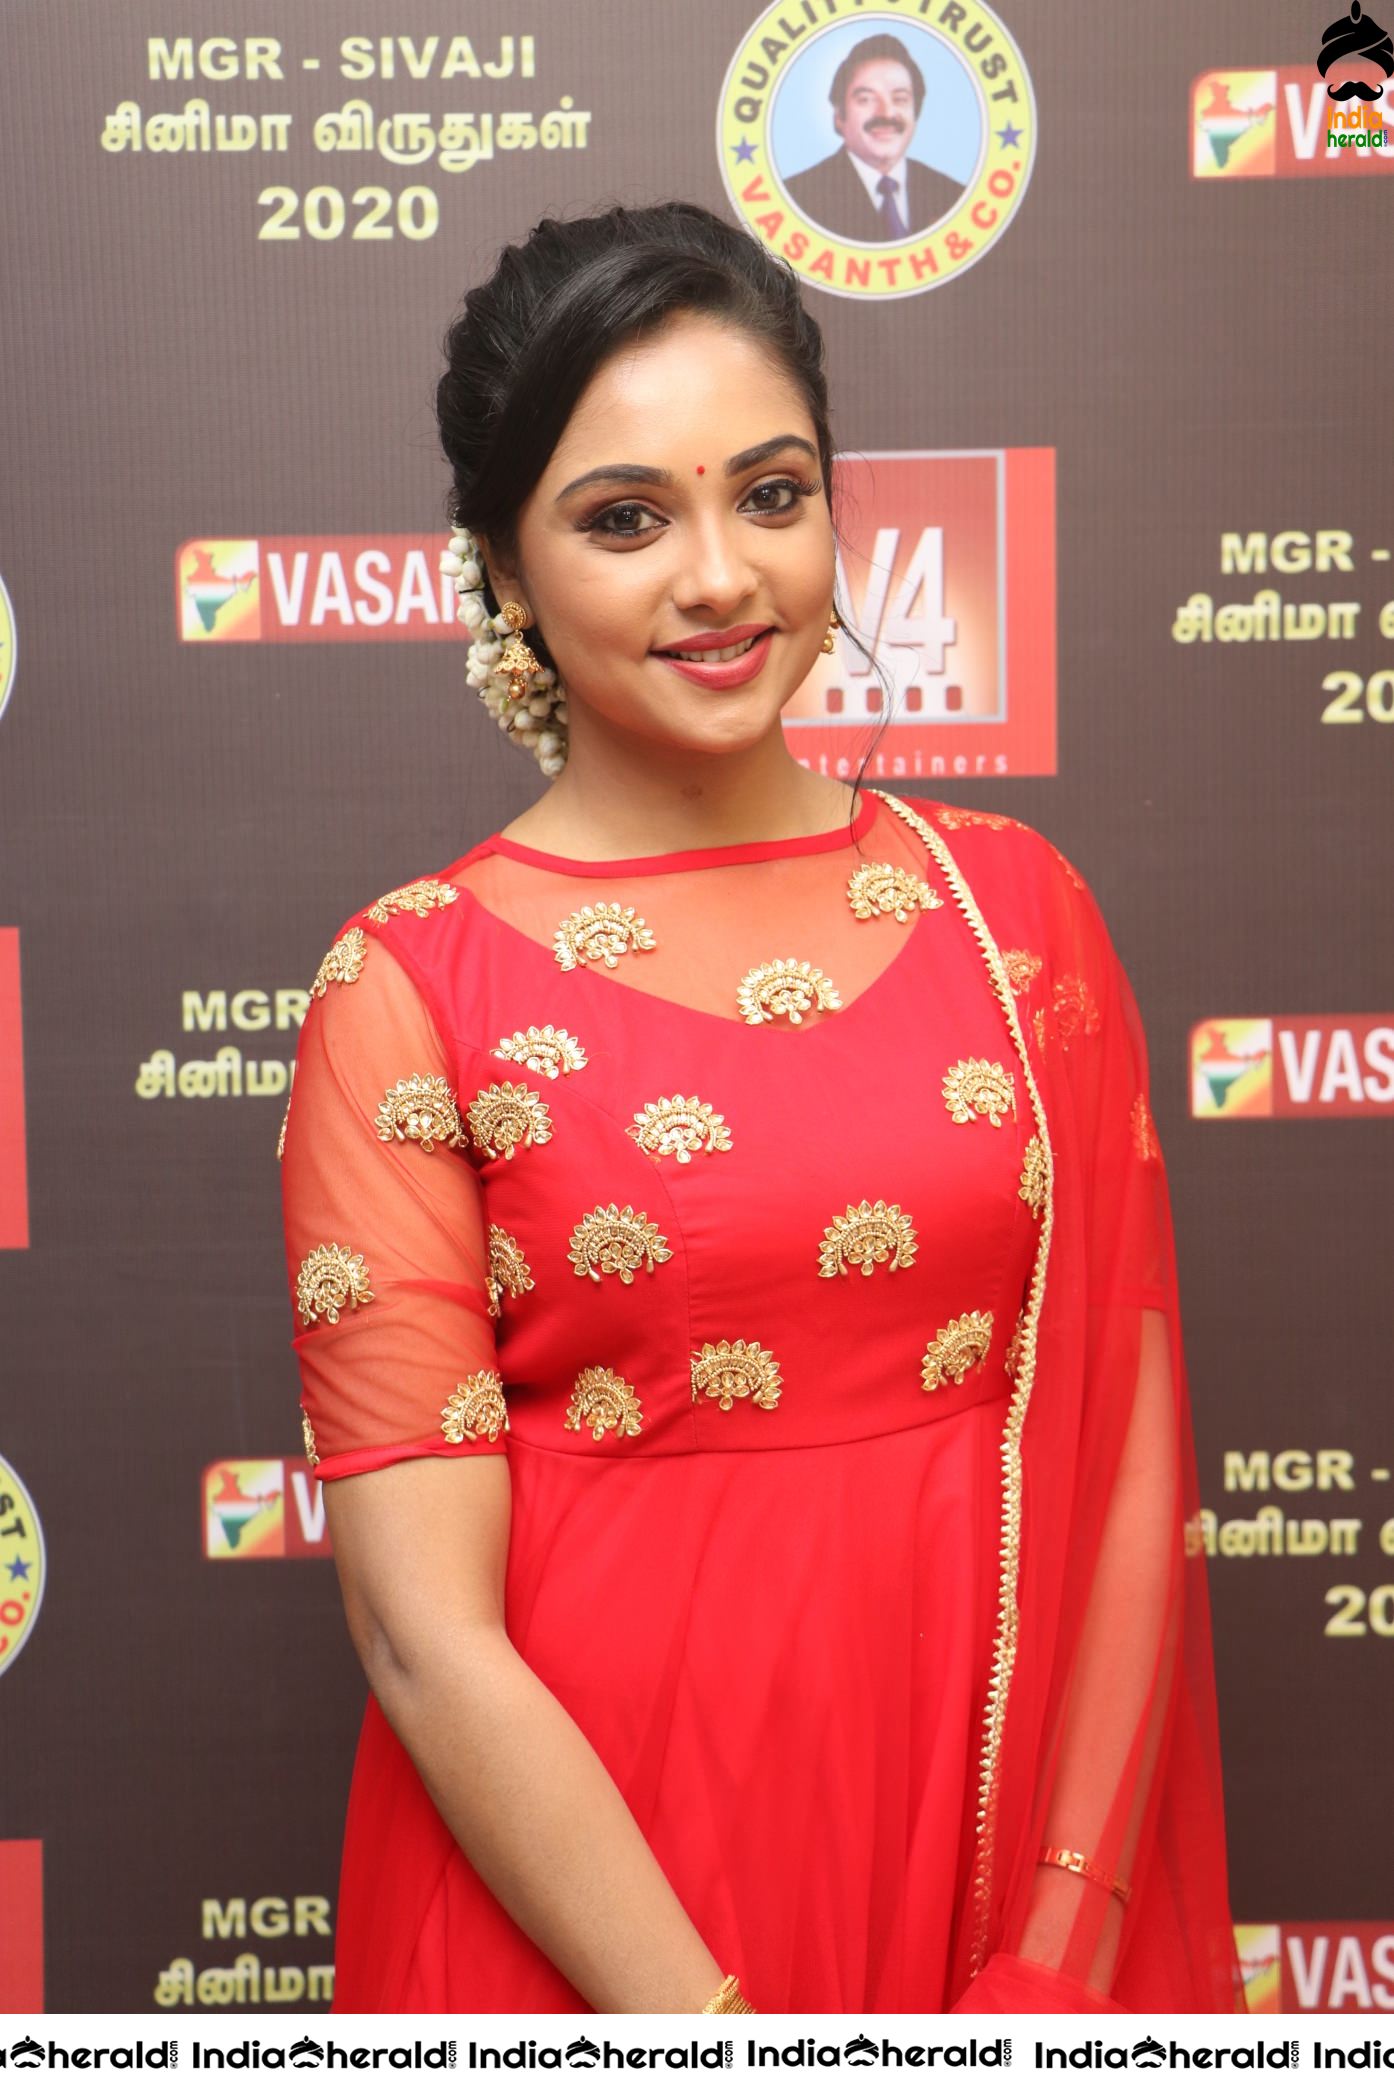 V4 MGR Sivaji Award Show Event Photos Set 2